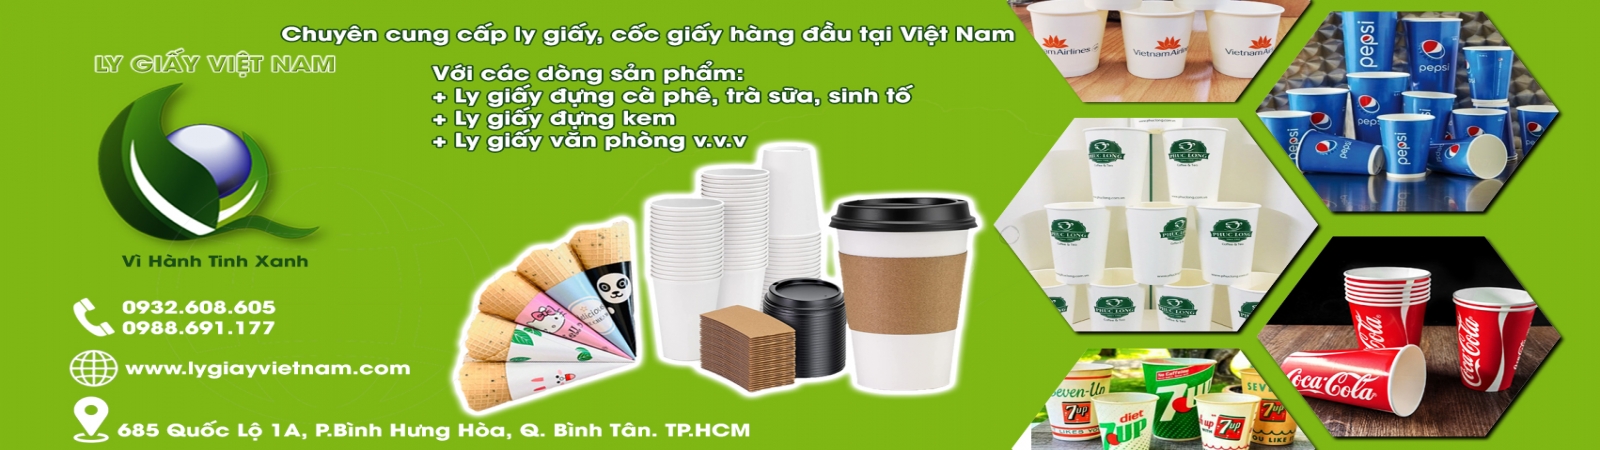 Banner Ly Giấy Việt Nam